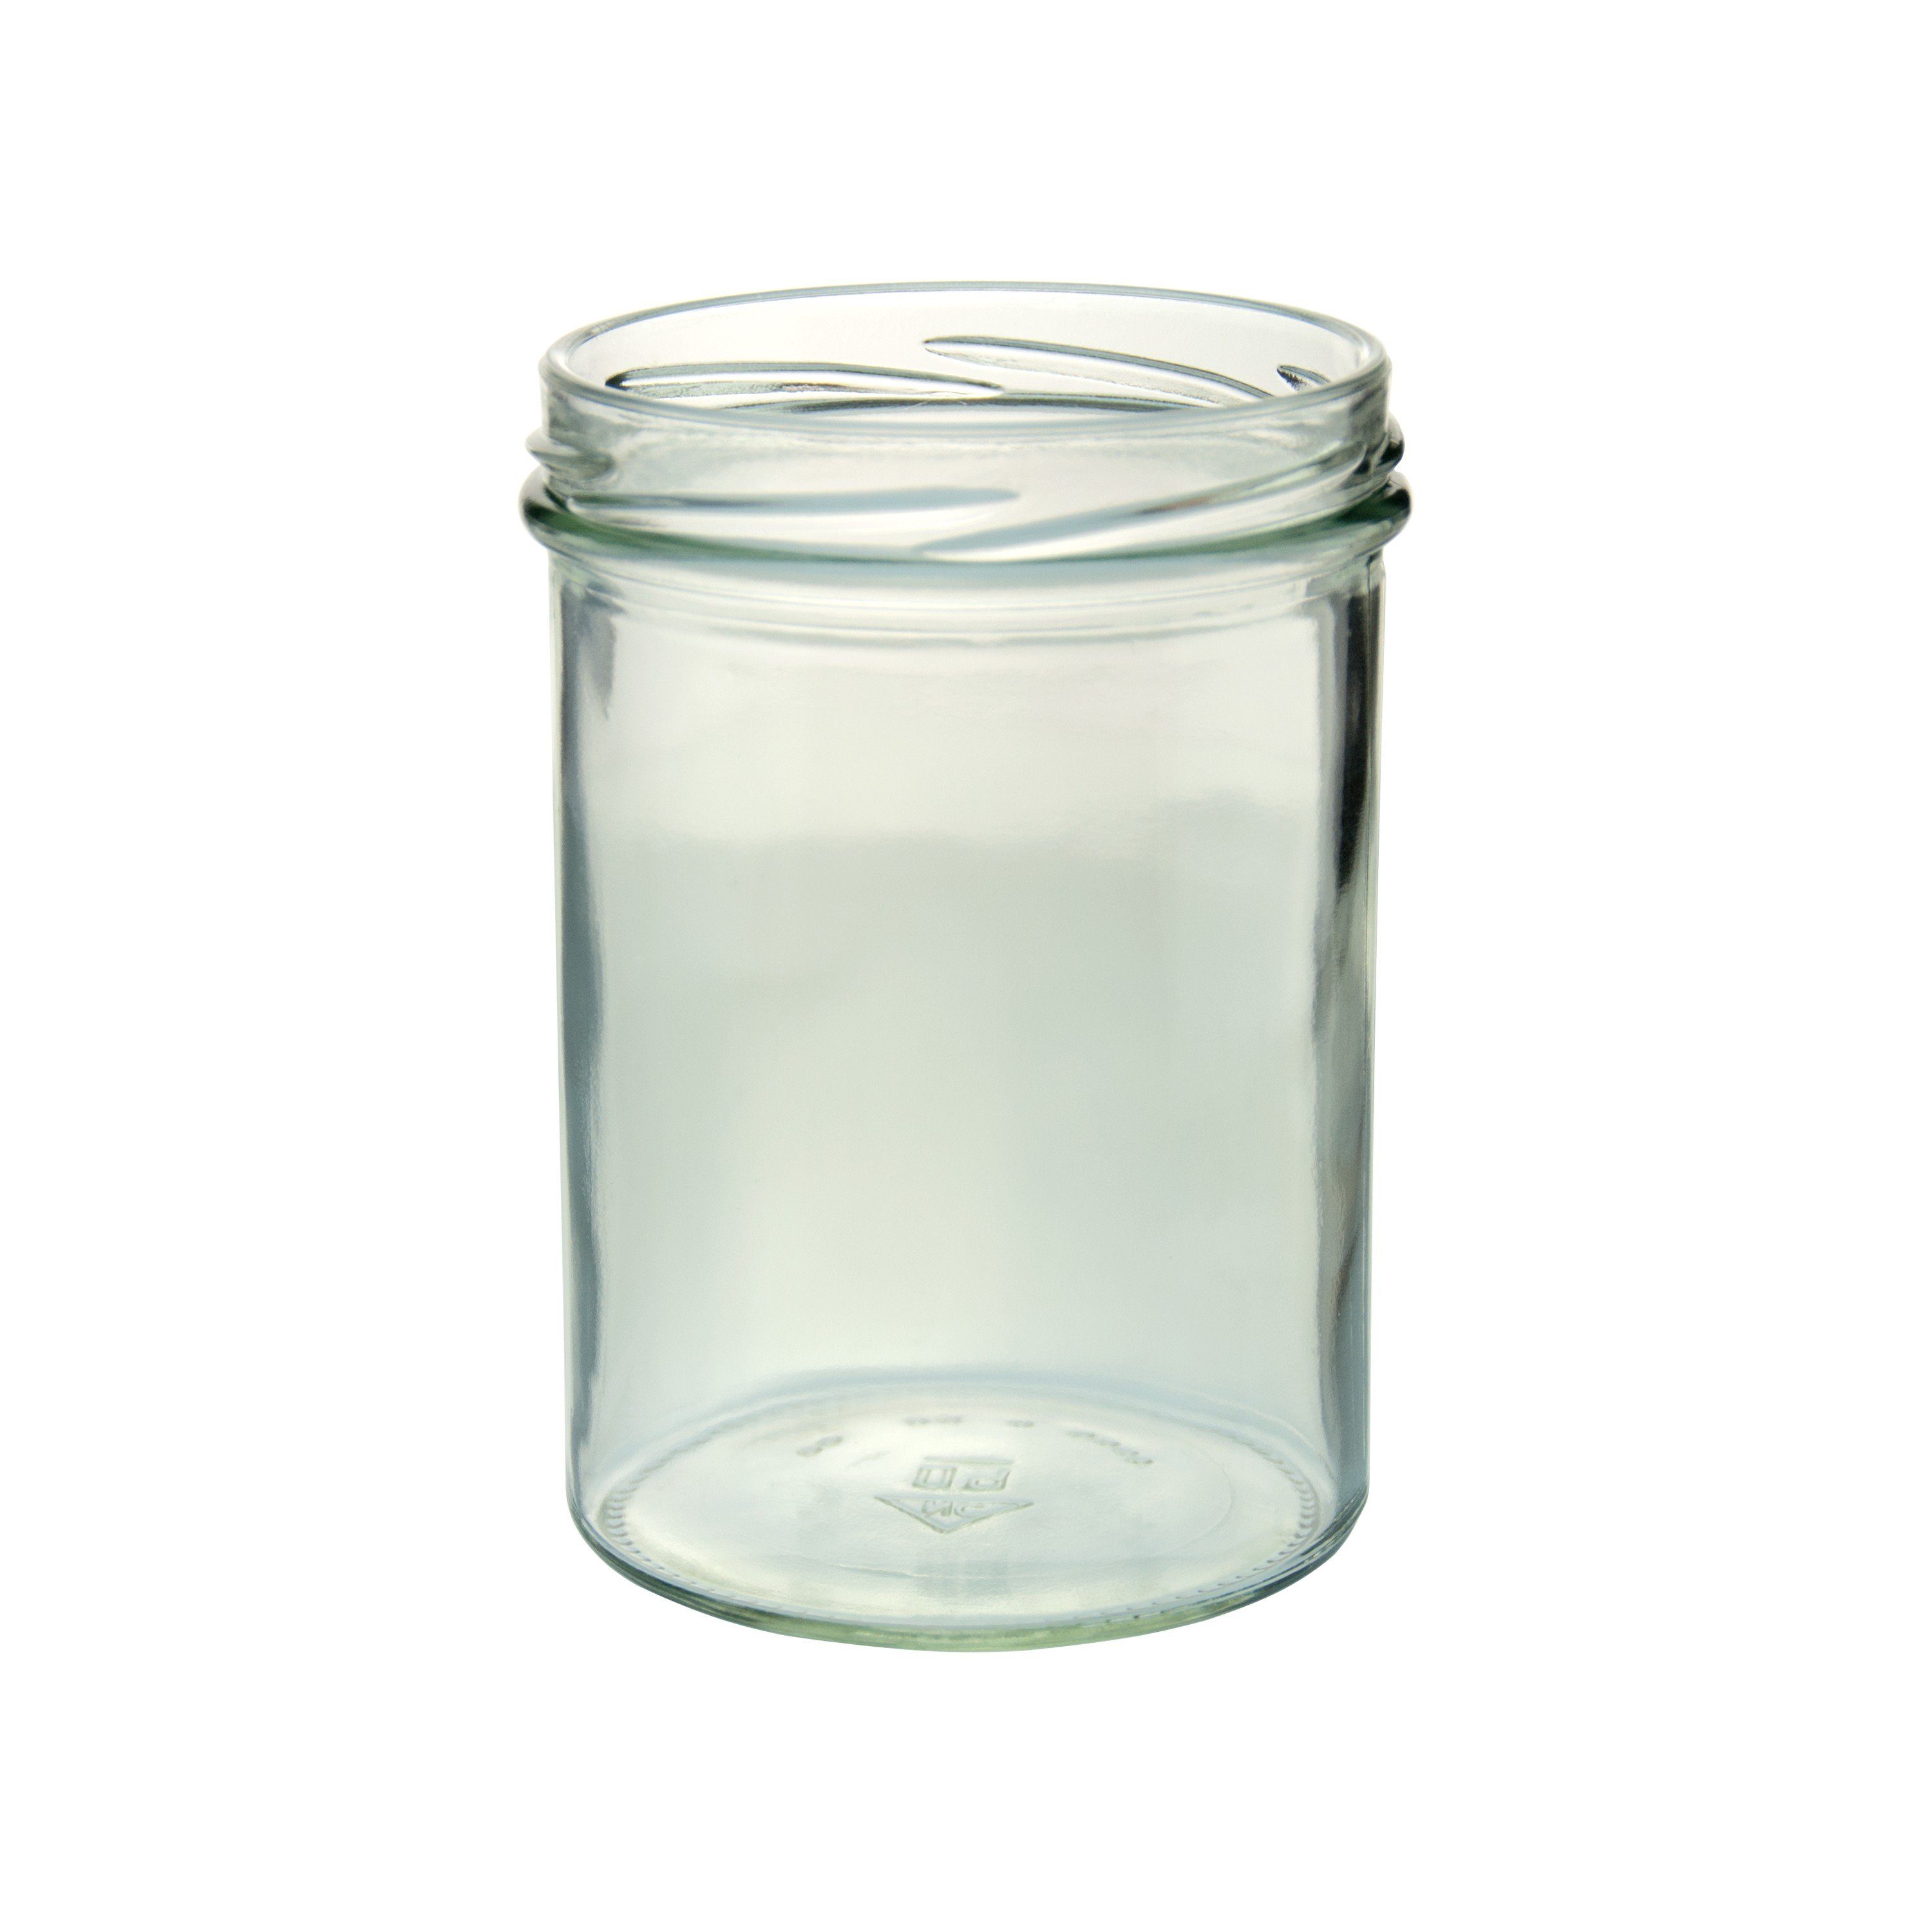 To Marmeladenglas Sturzglas Einmachglas silberner Glas Deckel, 82 48er ml MamboCat 435 Set